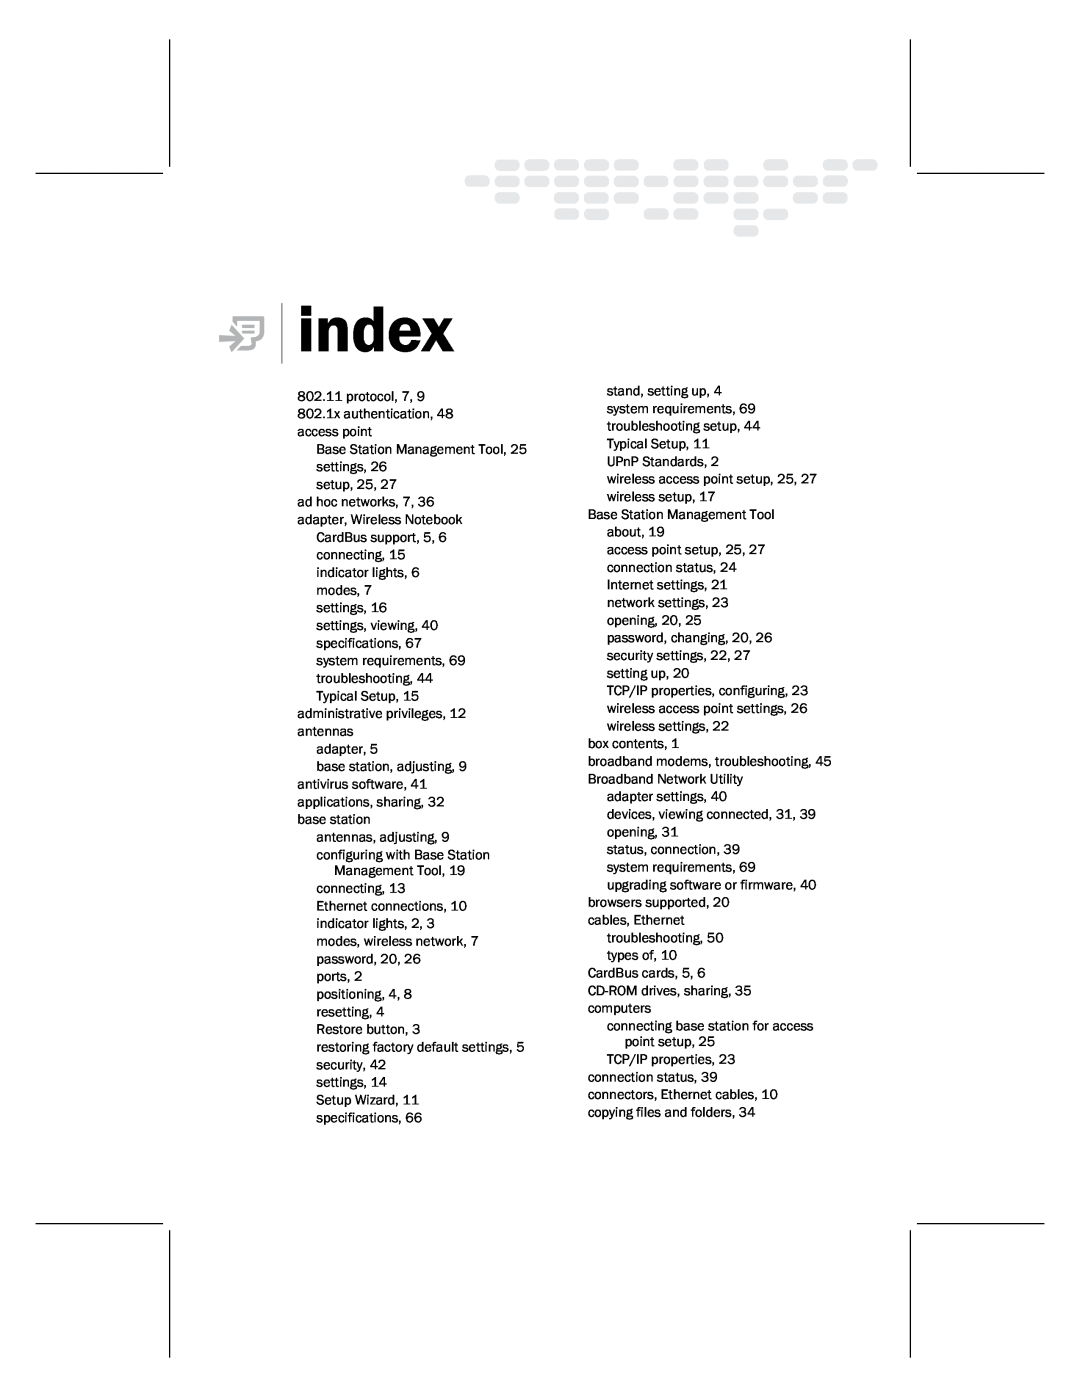 Microsoft MN-820 manual index 